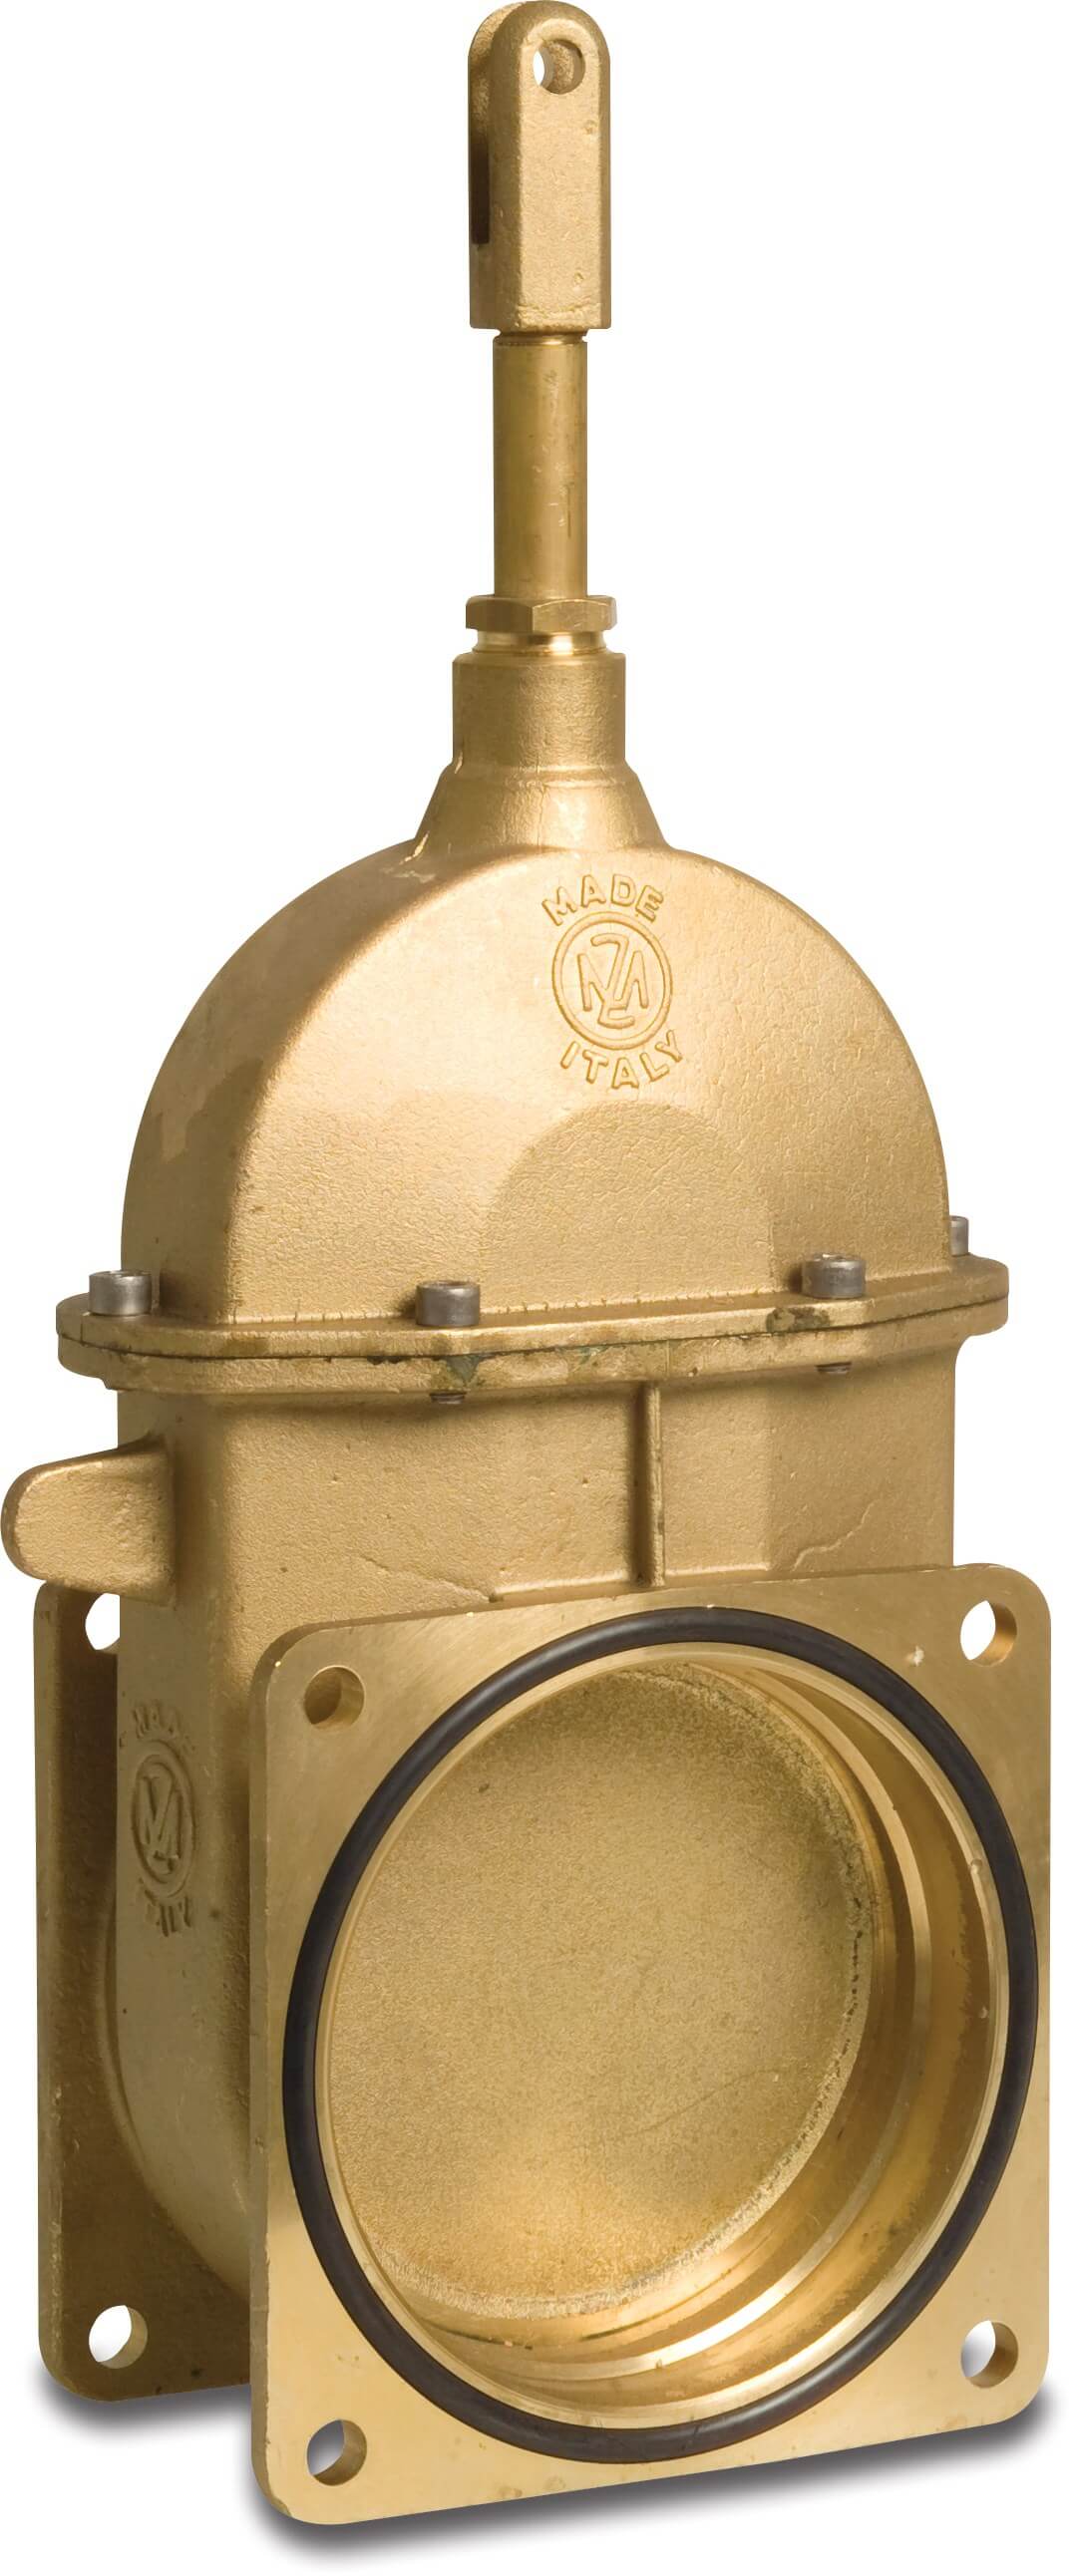 MZ Sluice valve brass 4" square flange 4bar type 0044